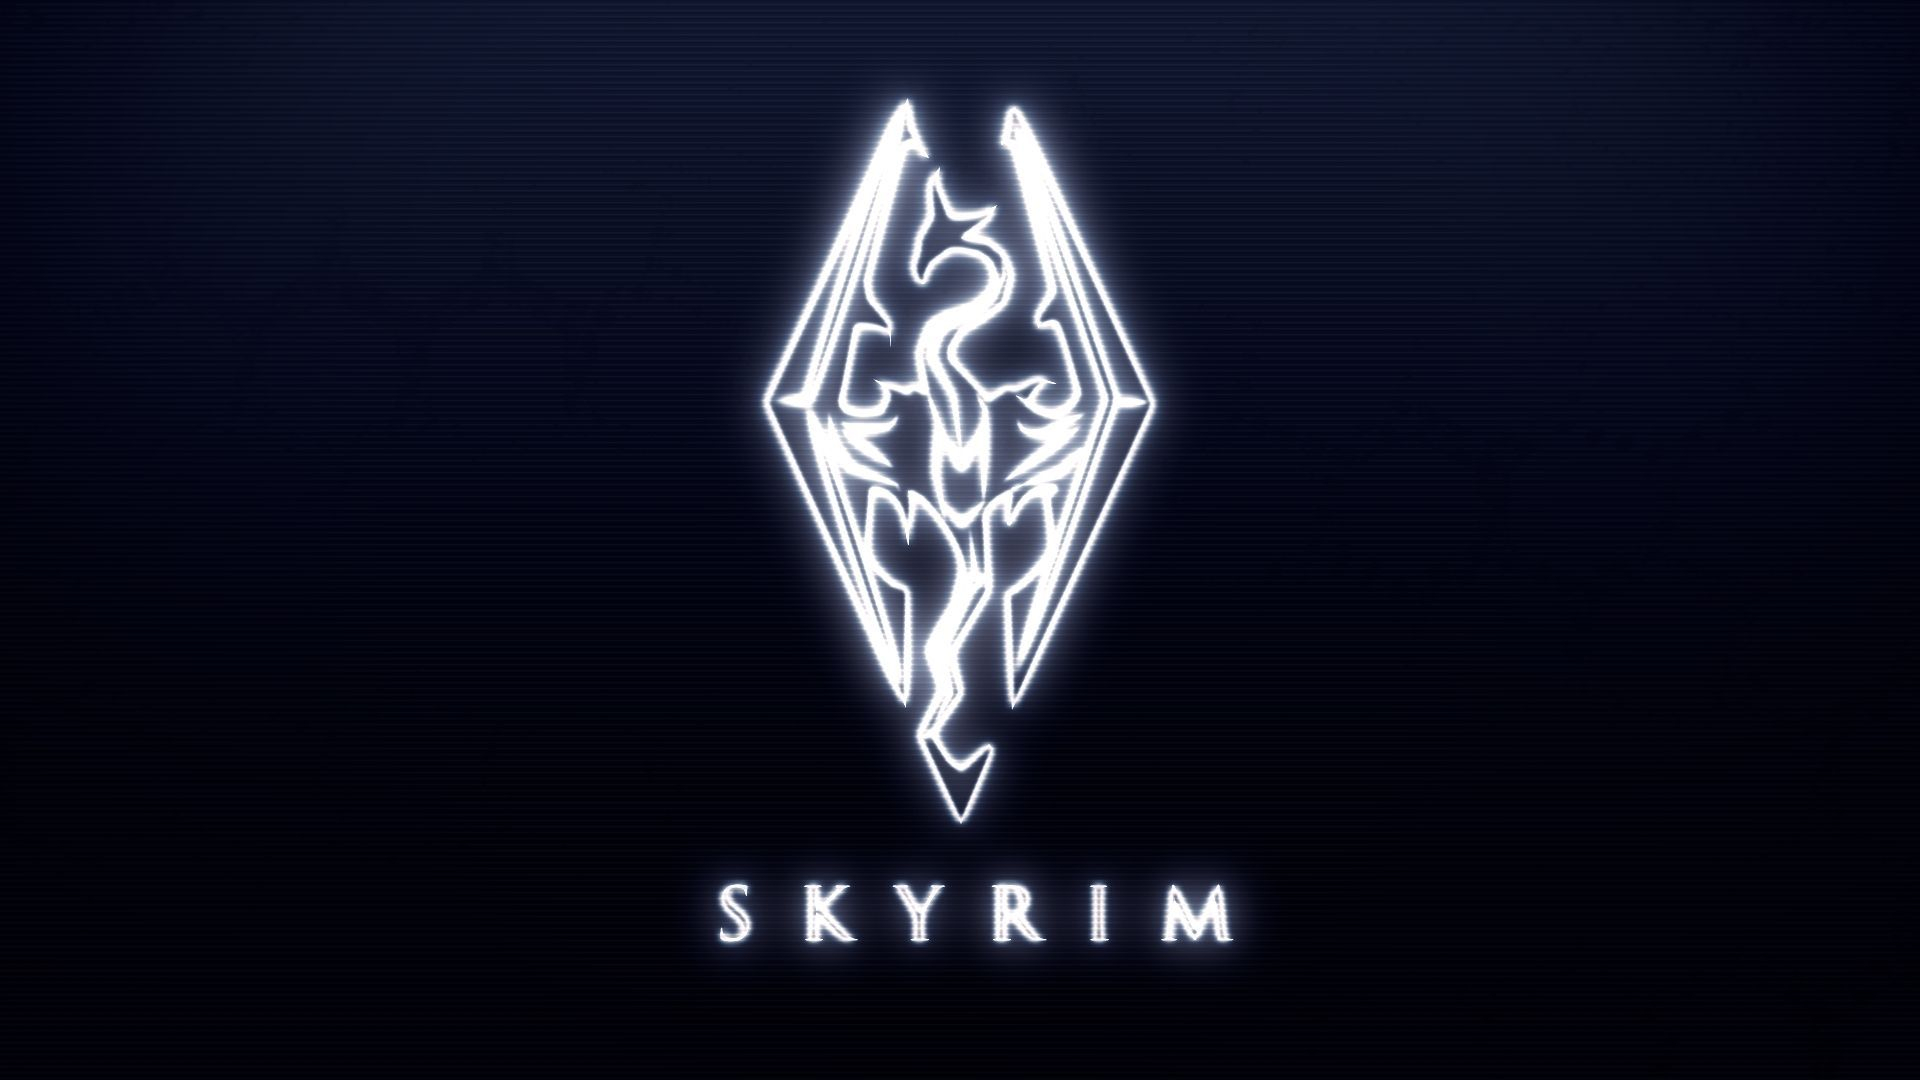 1920x1080 Skyrim Logo Wallpapers Top Free Skyrim Logo Backgrounds | Skyrim, Elder scrolls v skyrim, Elder scrolls